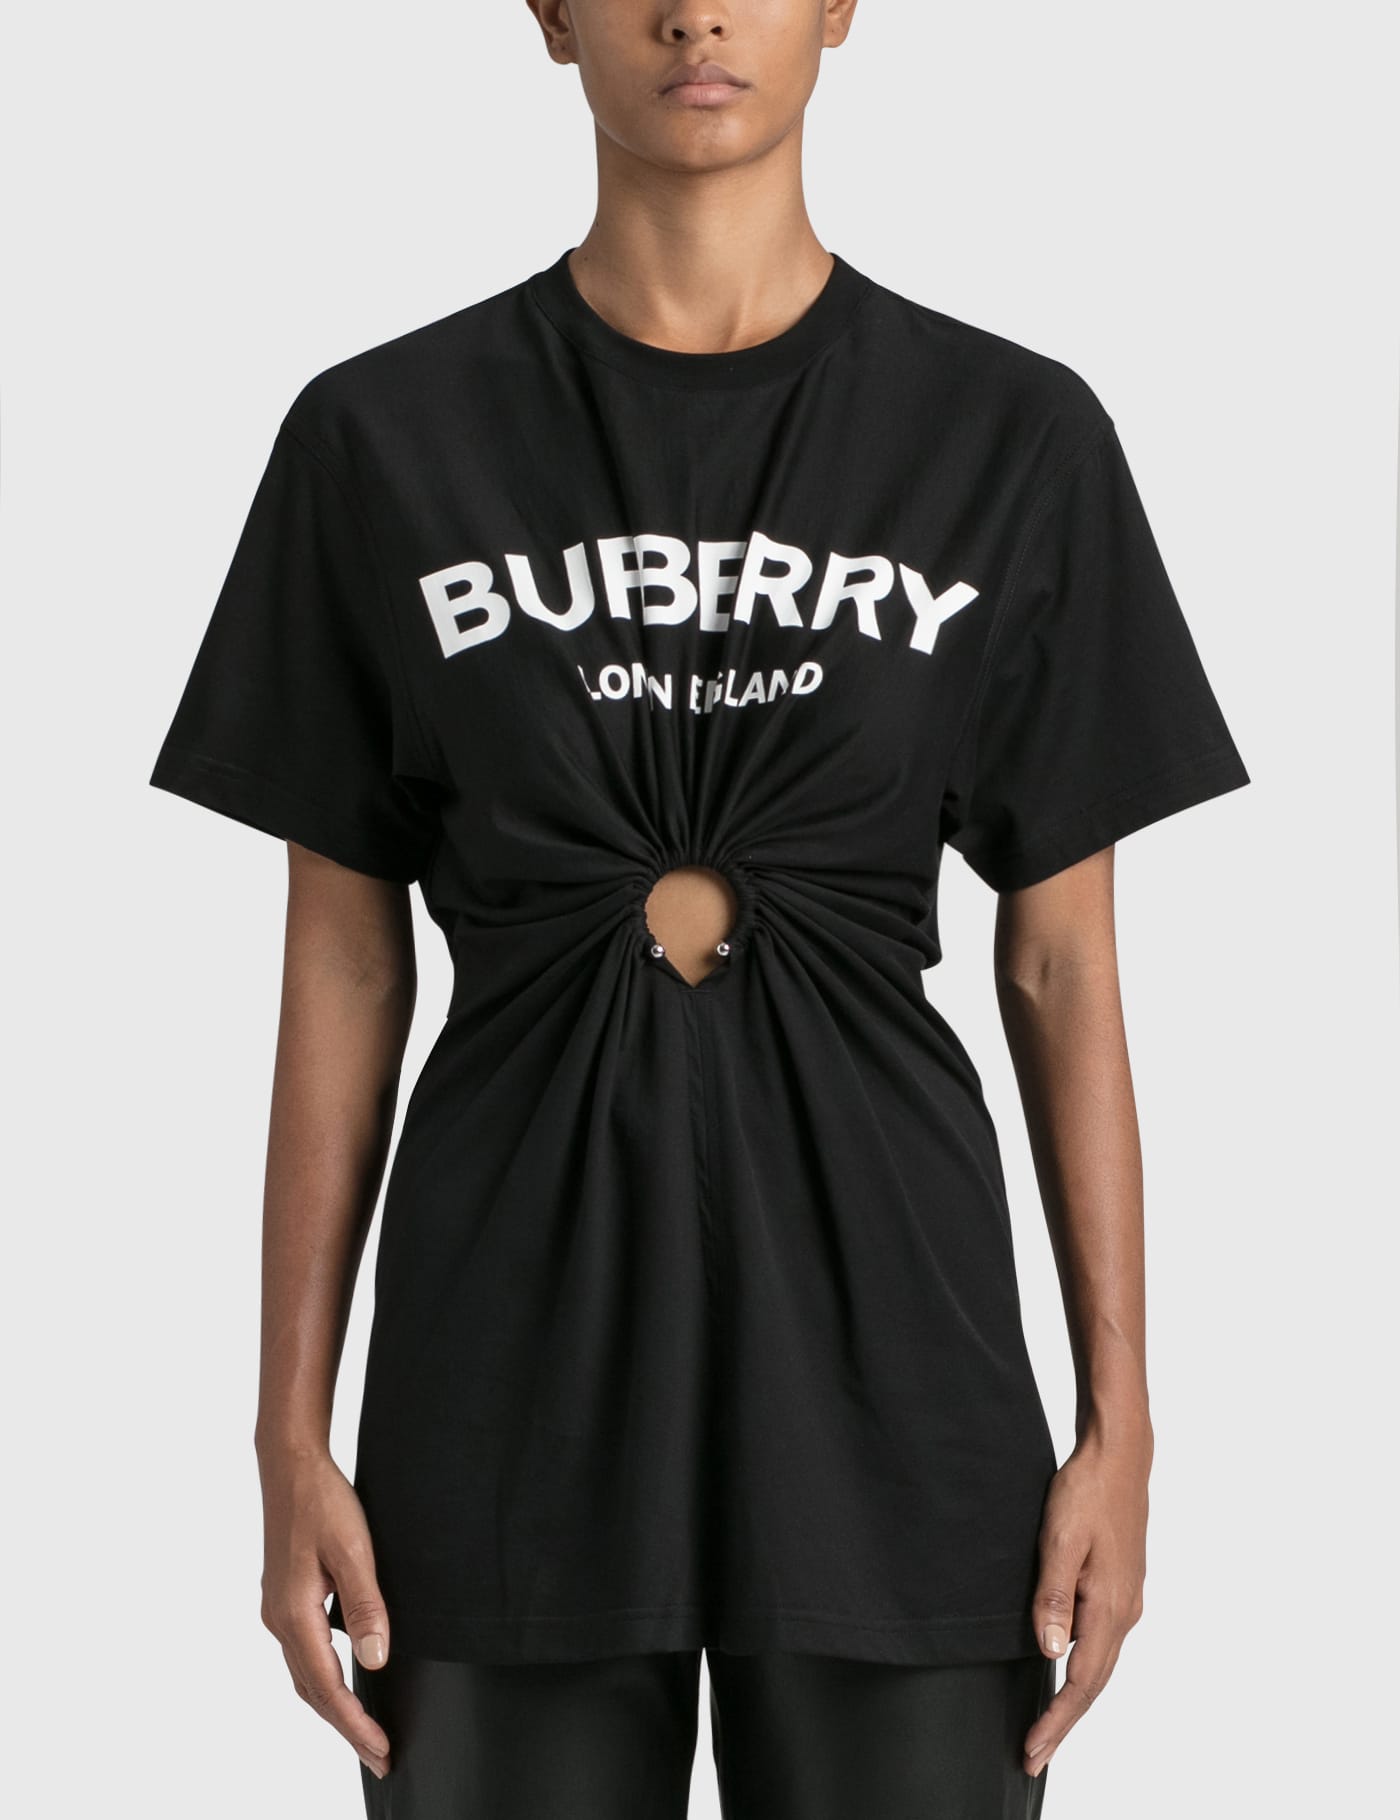 Burberry Horseferry Print T-Shirt